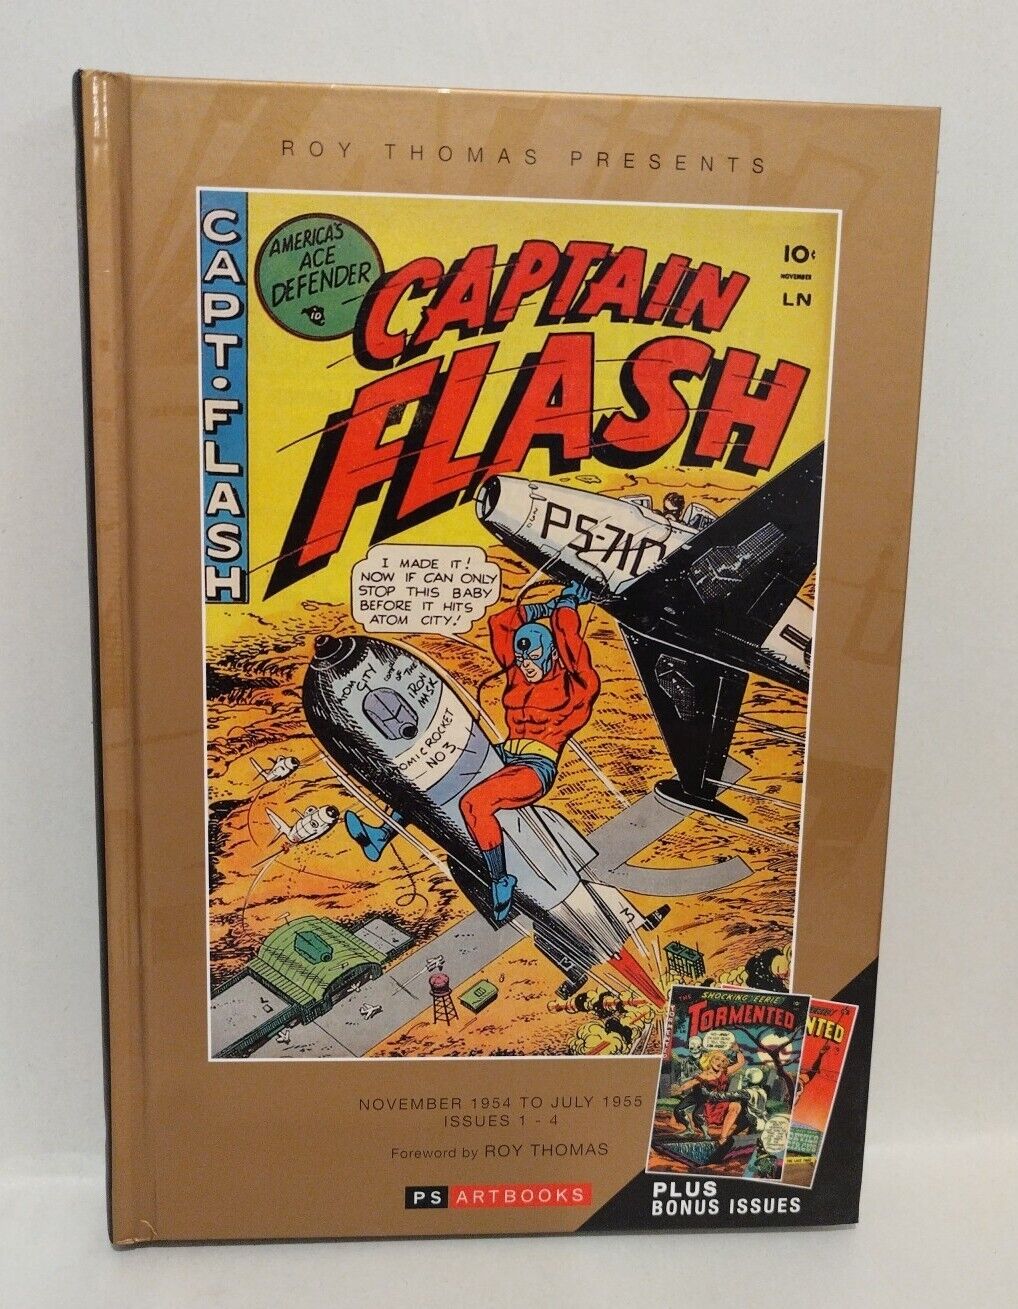 Roy Thomas Presents Captain Flash / Tormented HC Golden Age PS Artbooks New